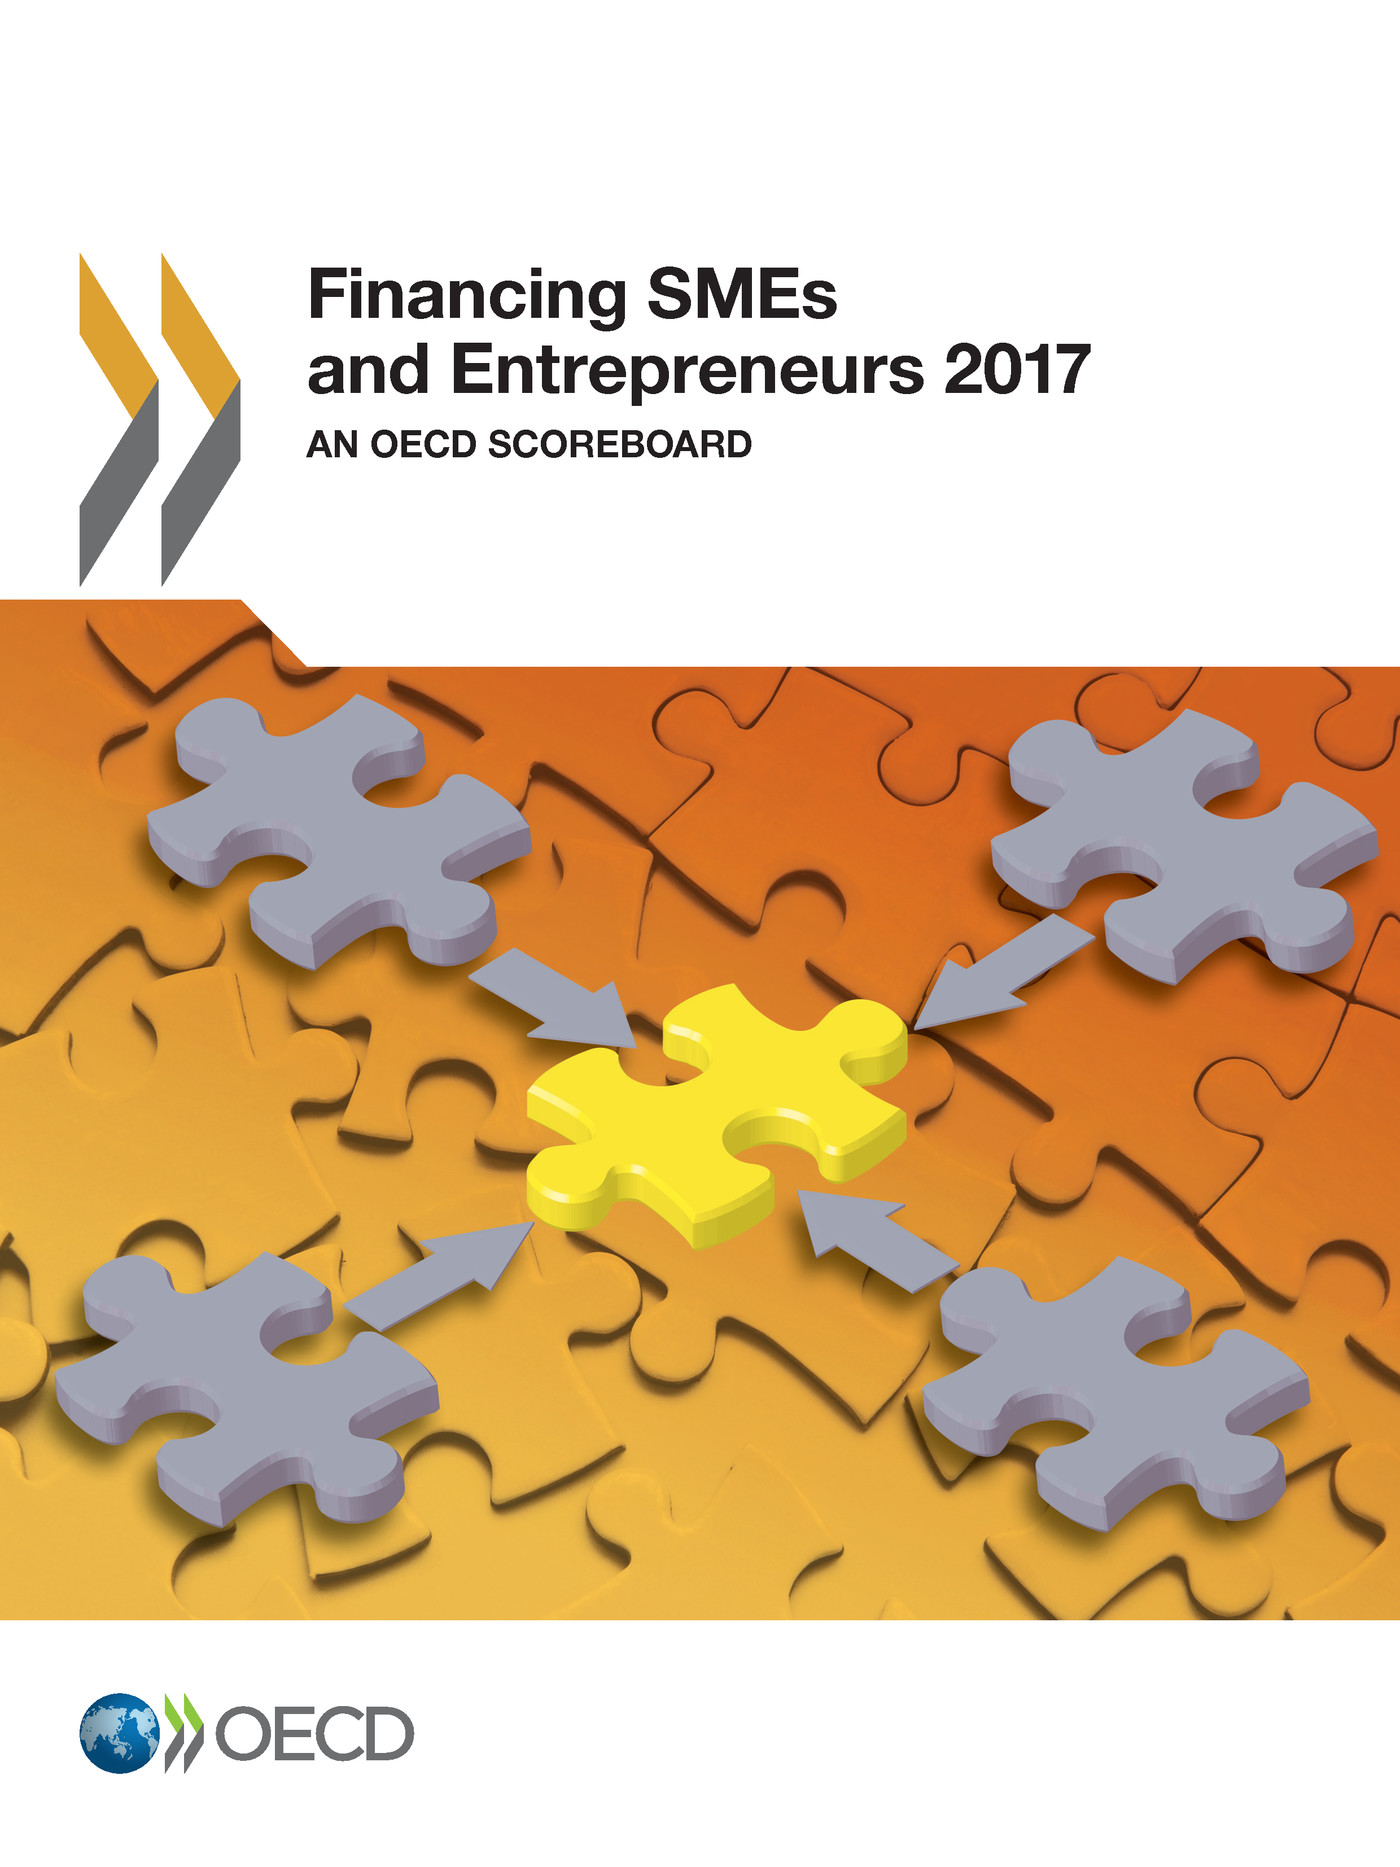 Financing SMEs and Entrepreneurs 2017 -  Collectif - OCDE / OECD